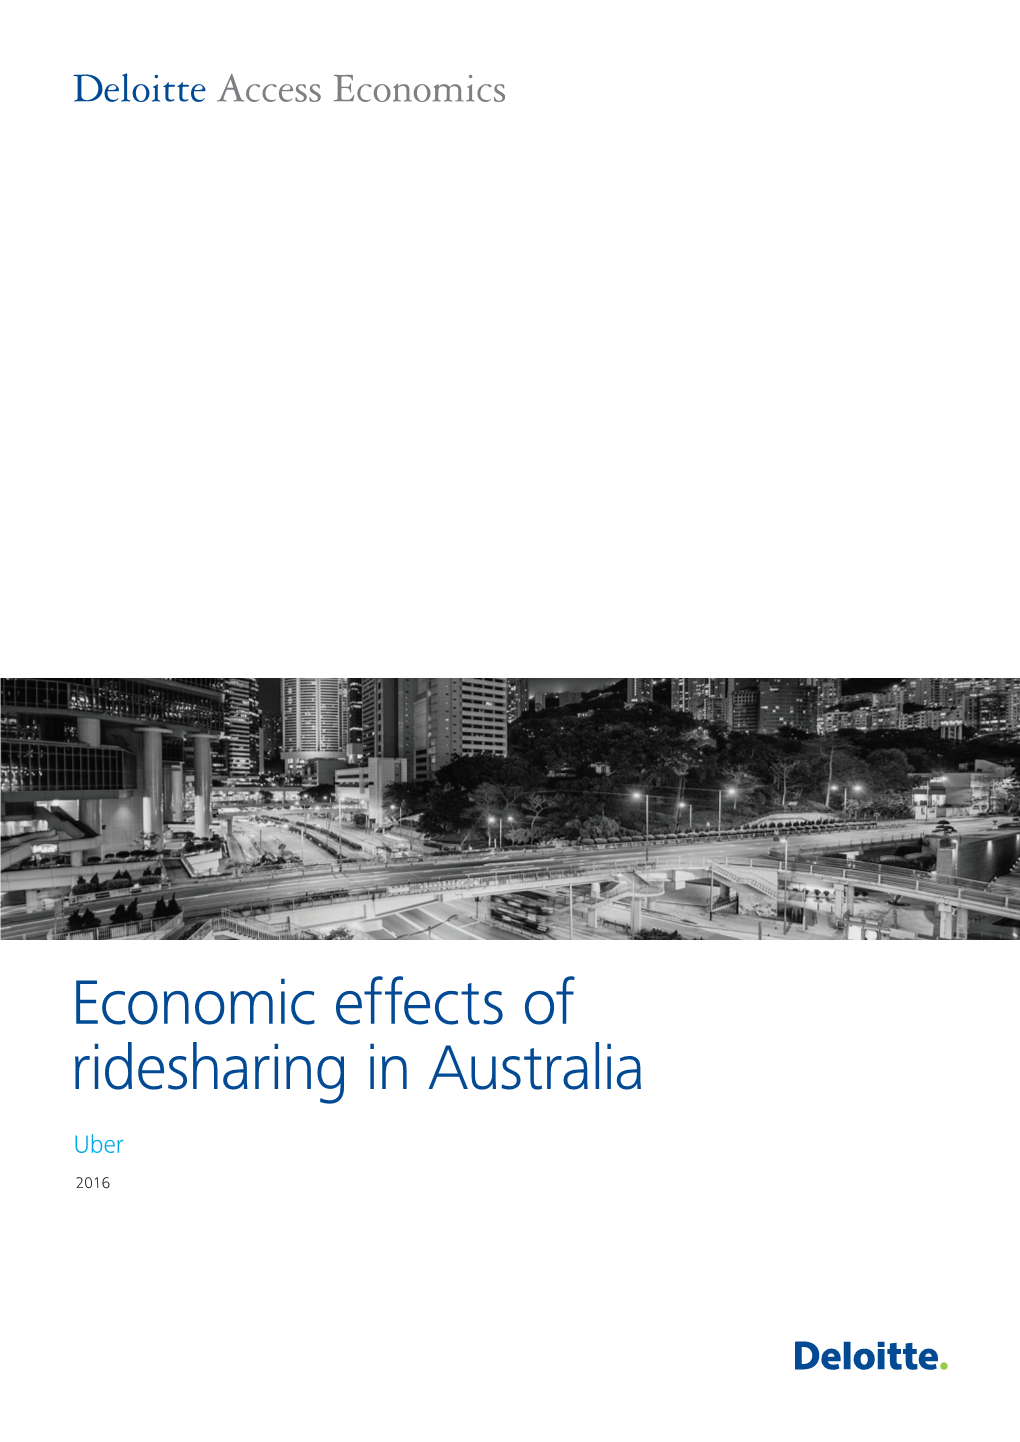 Economic Effects of Ridesharing in Australia